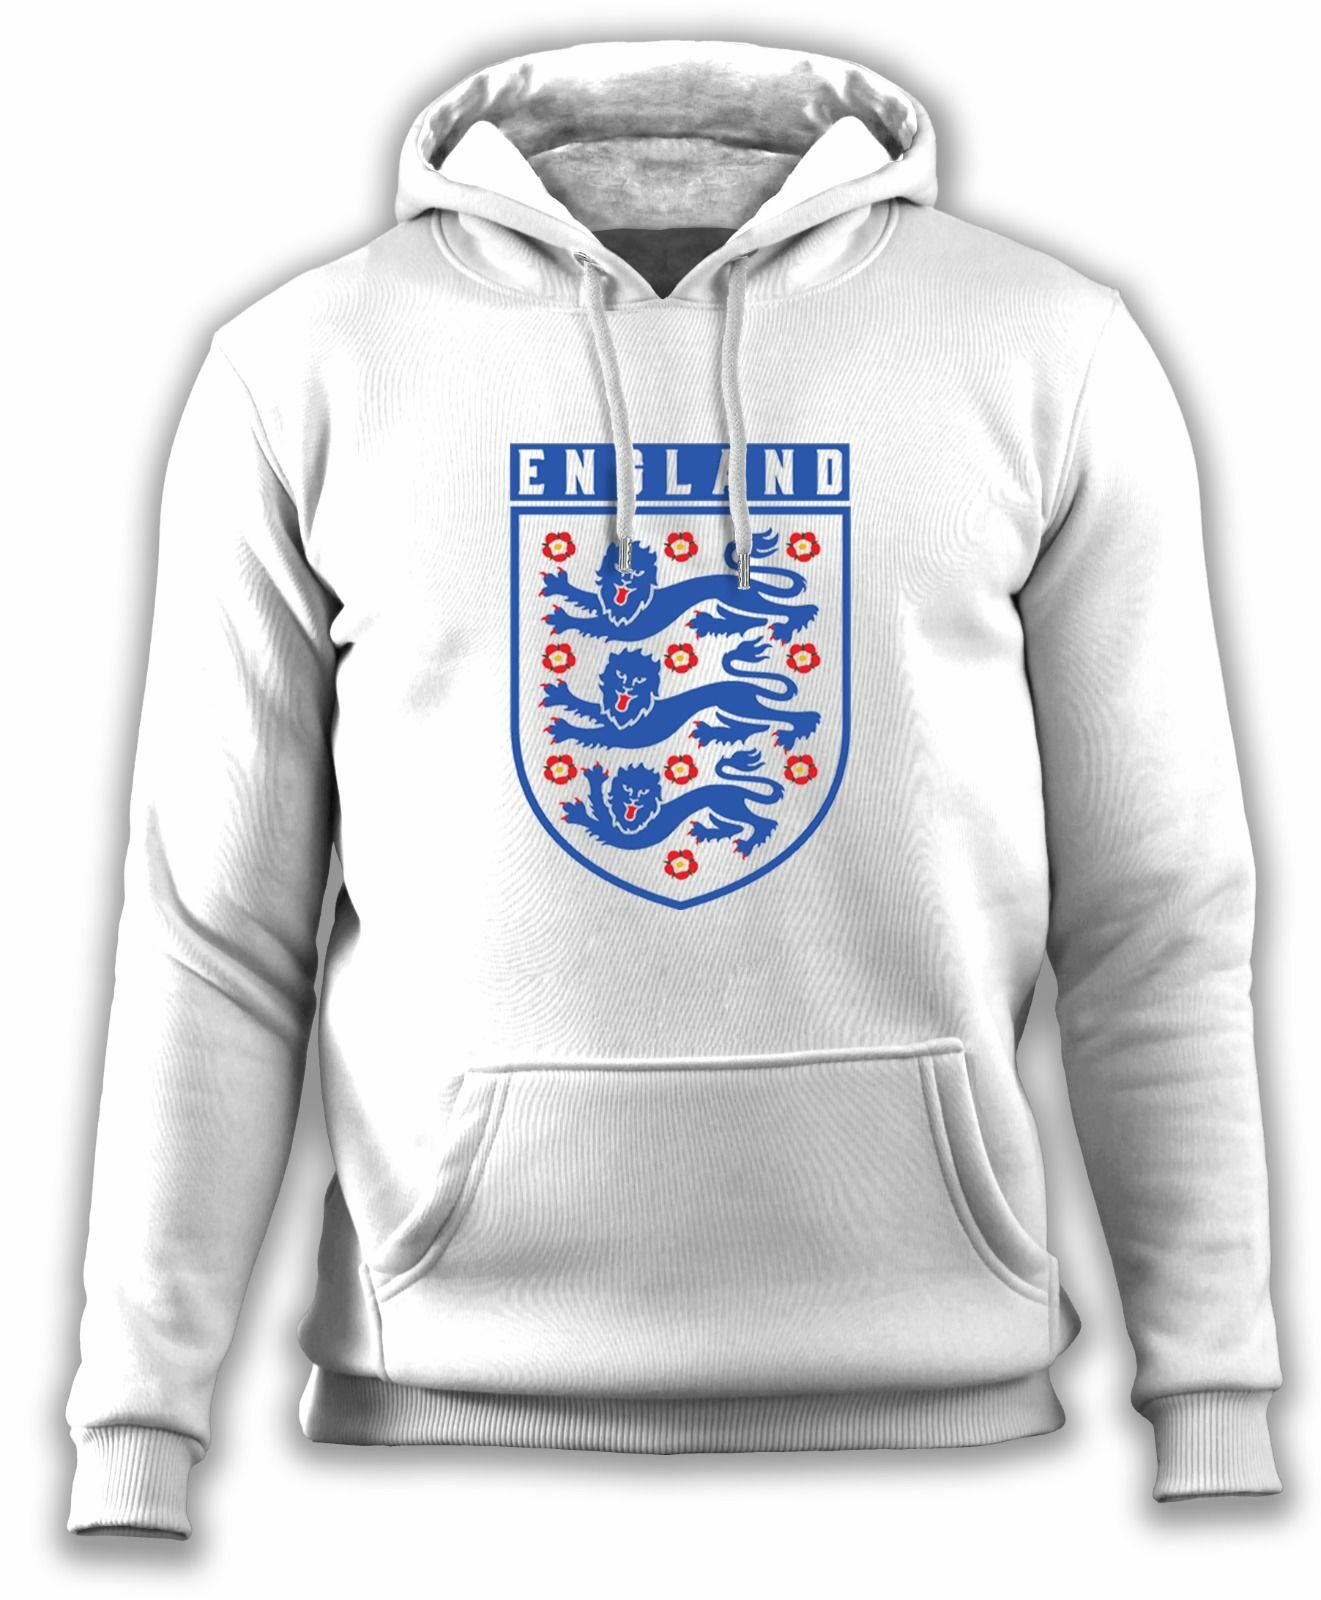 England (İngiltere) - Sweatshirt